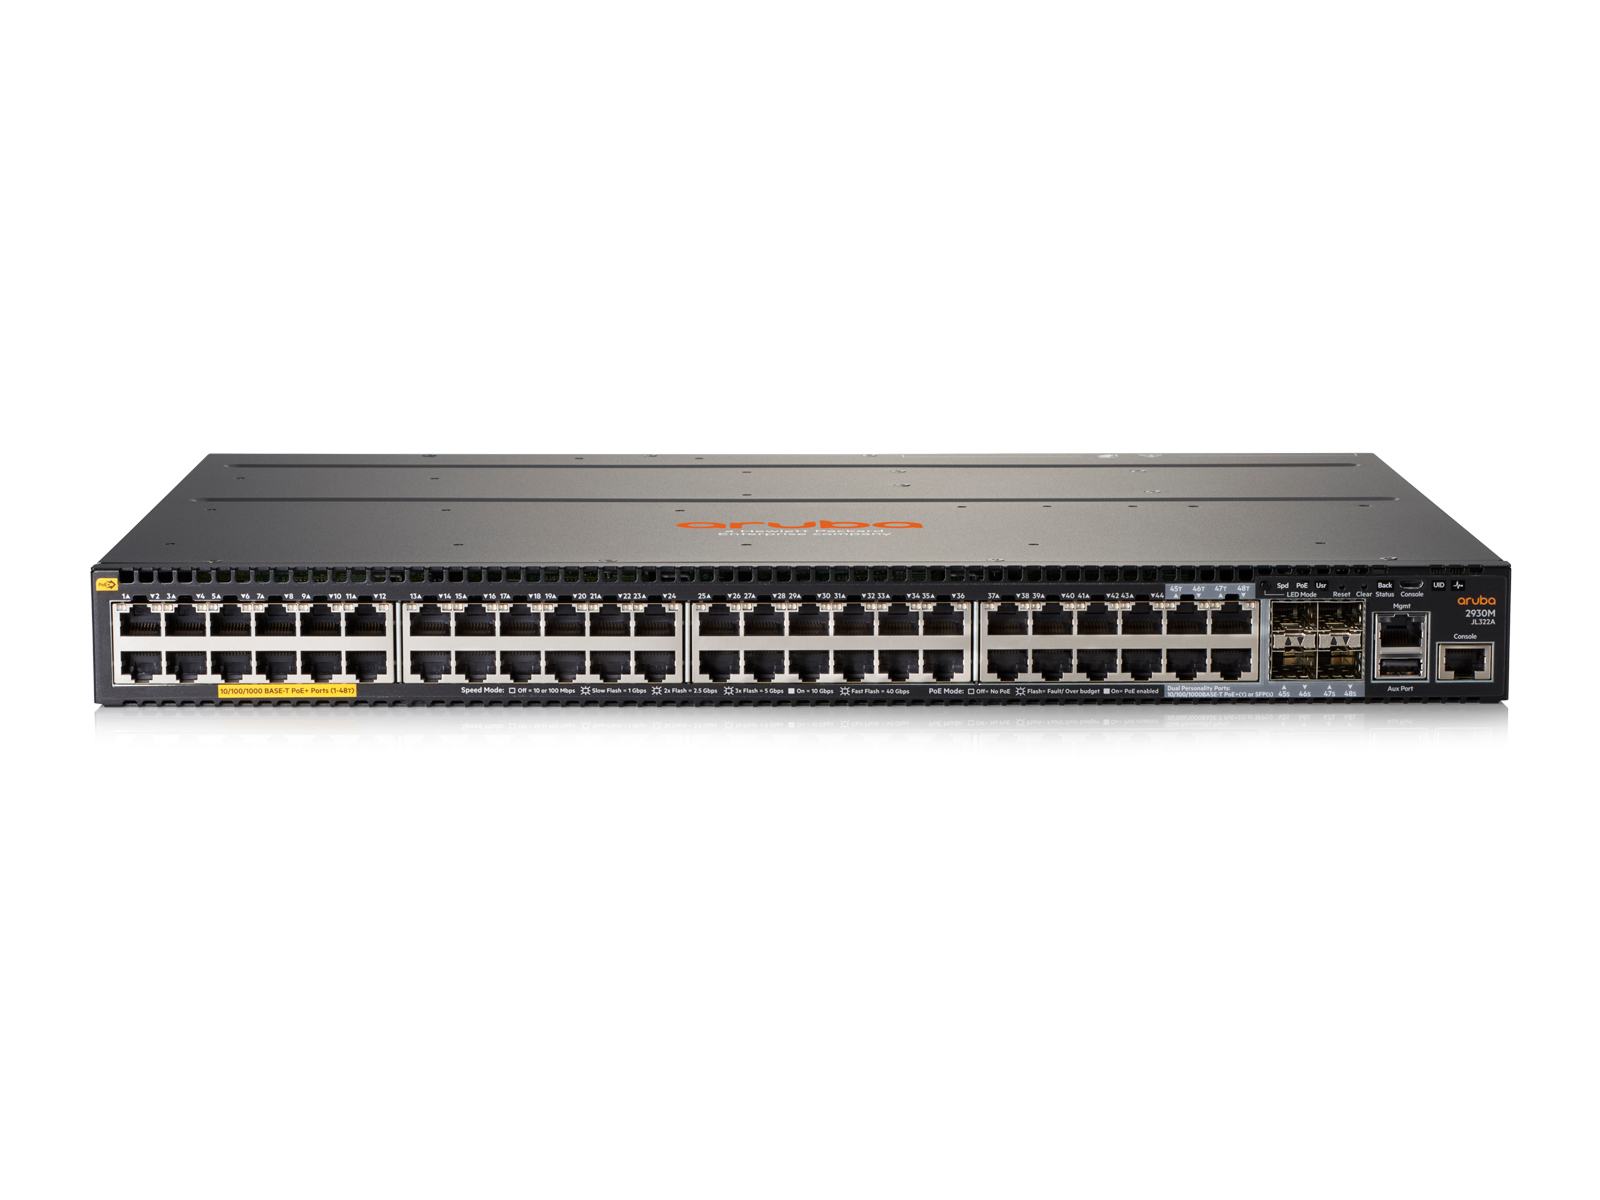 Aruba 2930M 48G PoE+ 1-slot Managed L3 Gigabit Ethernet